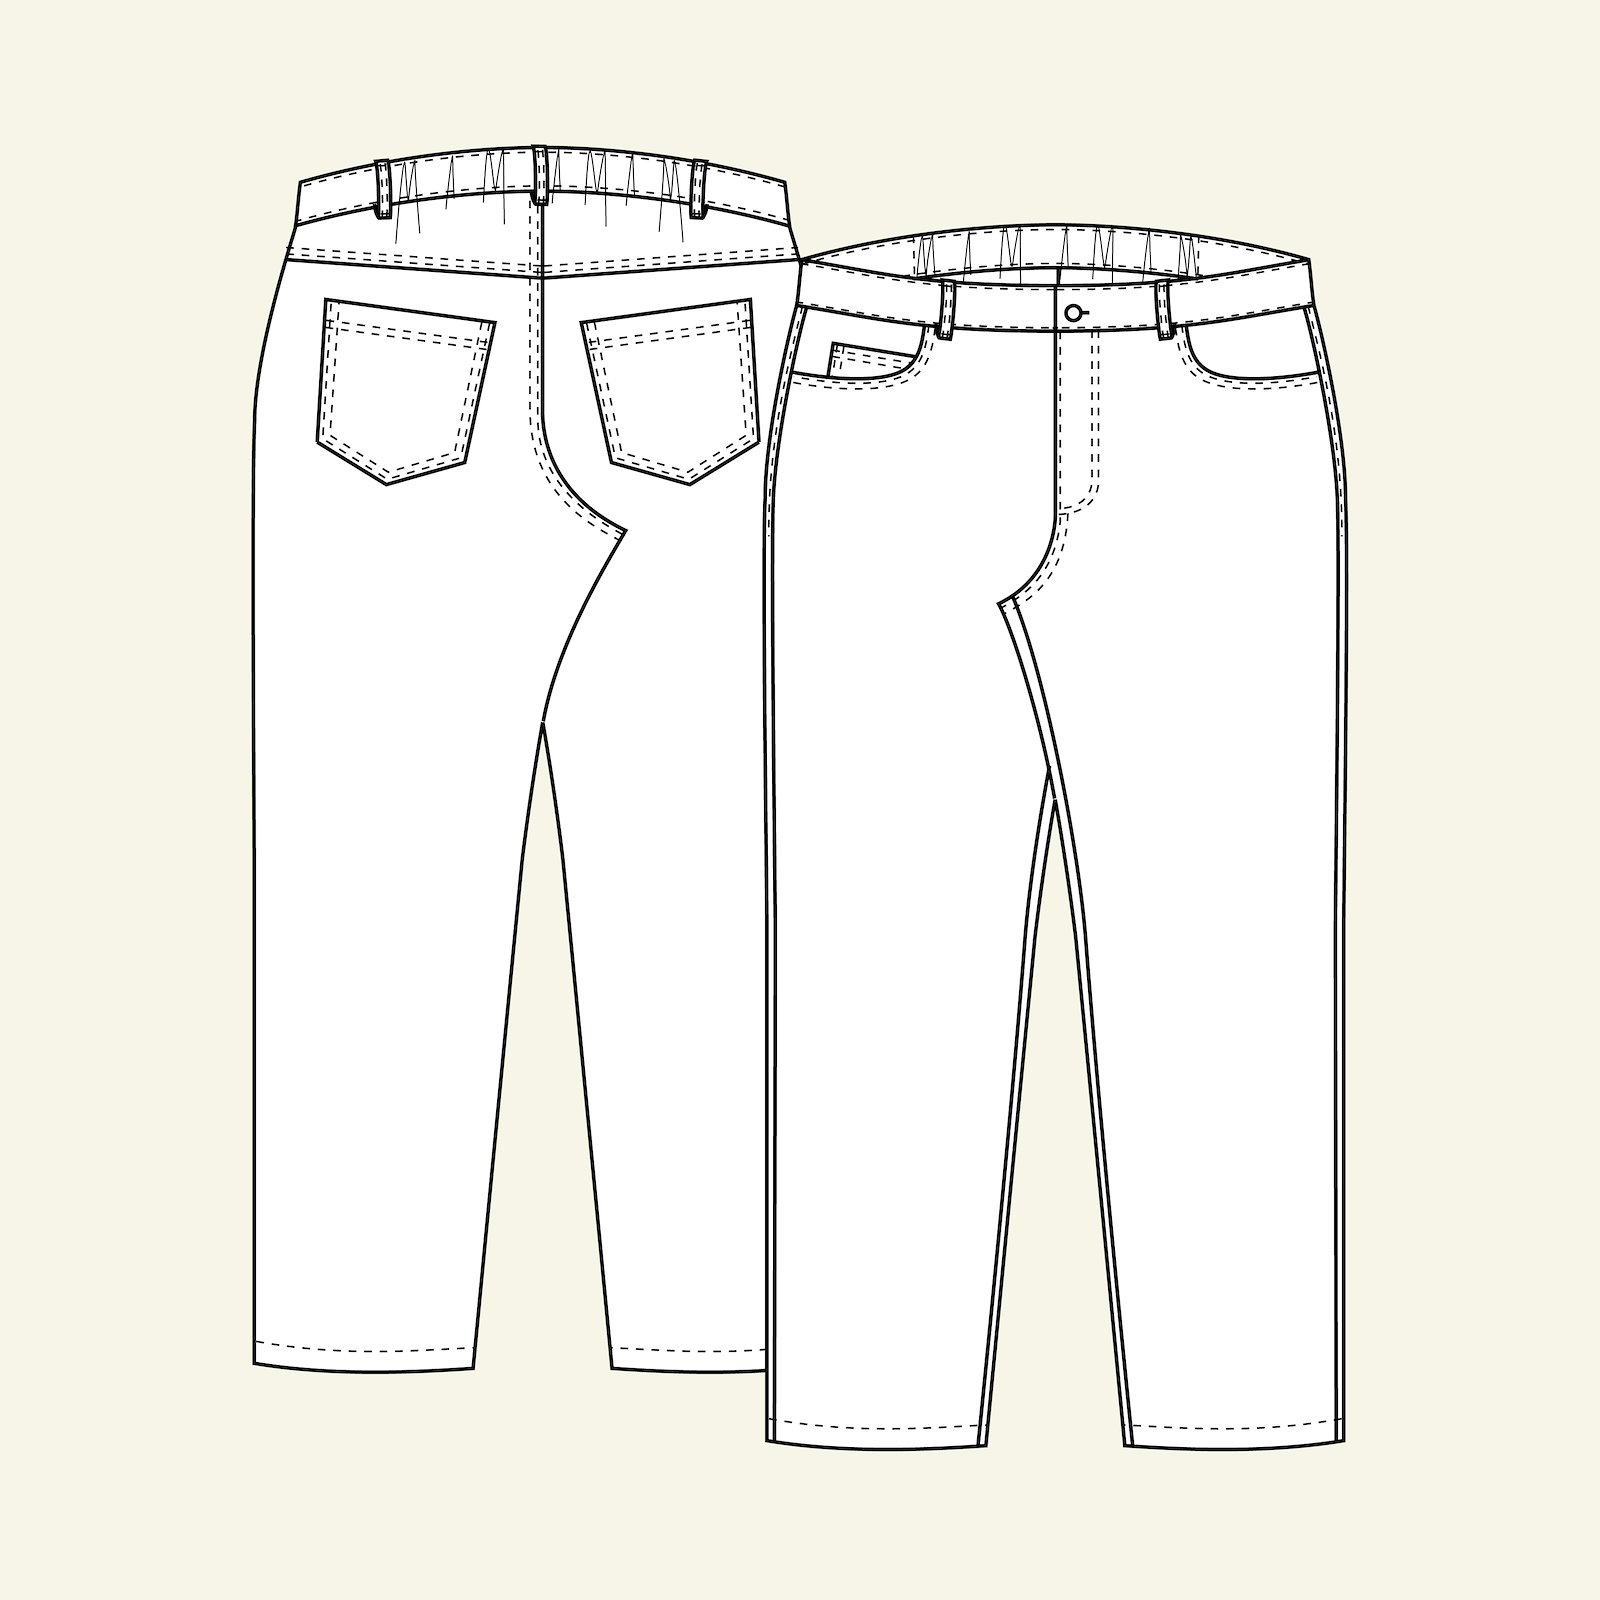 Klassisk jeans med resårlinning bak, 56 p70007000_p70007001_p70007002_p70007003_p70007004_pack_b